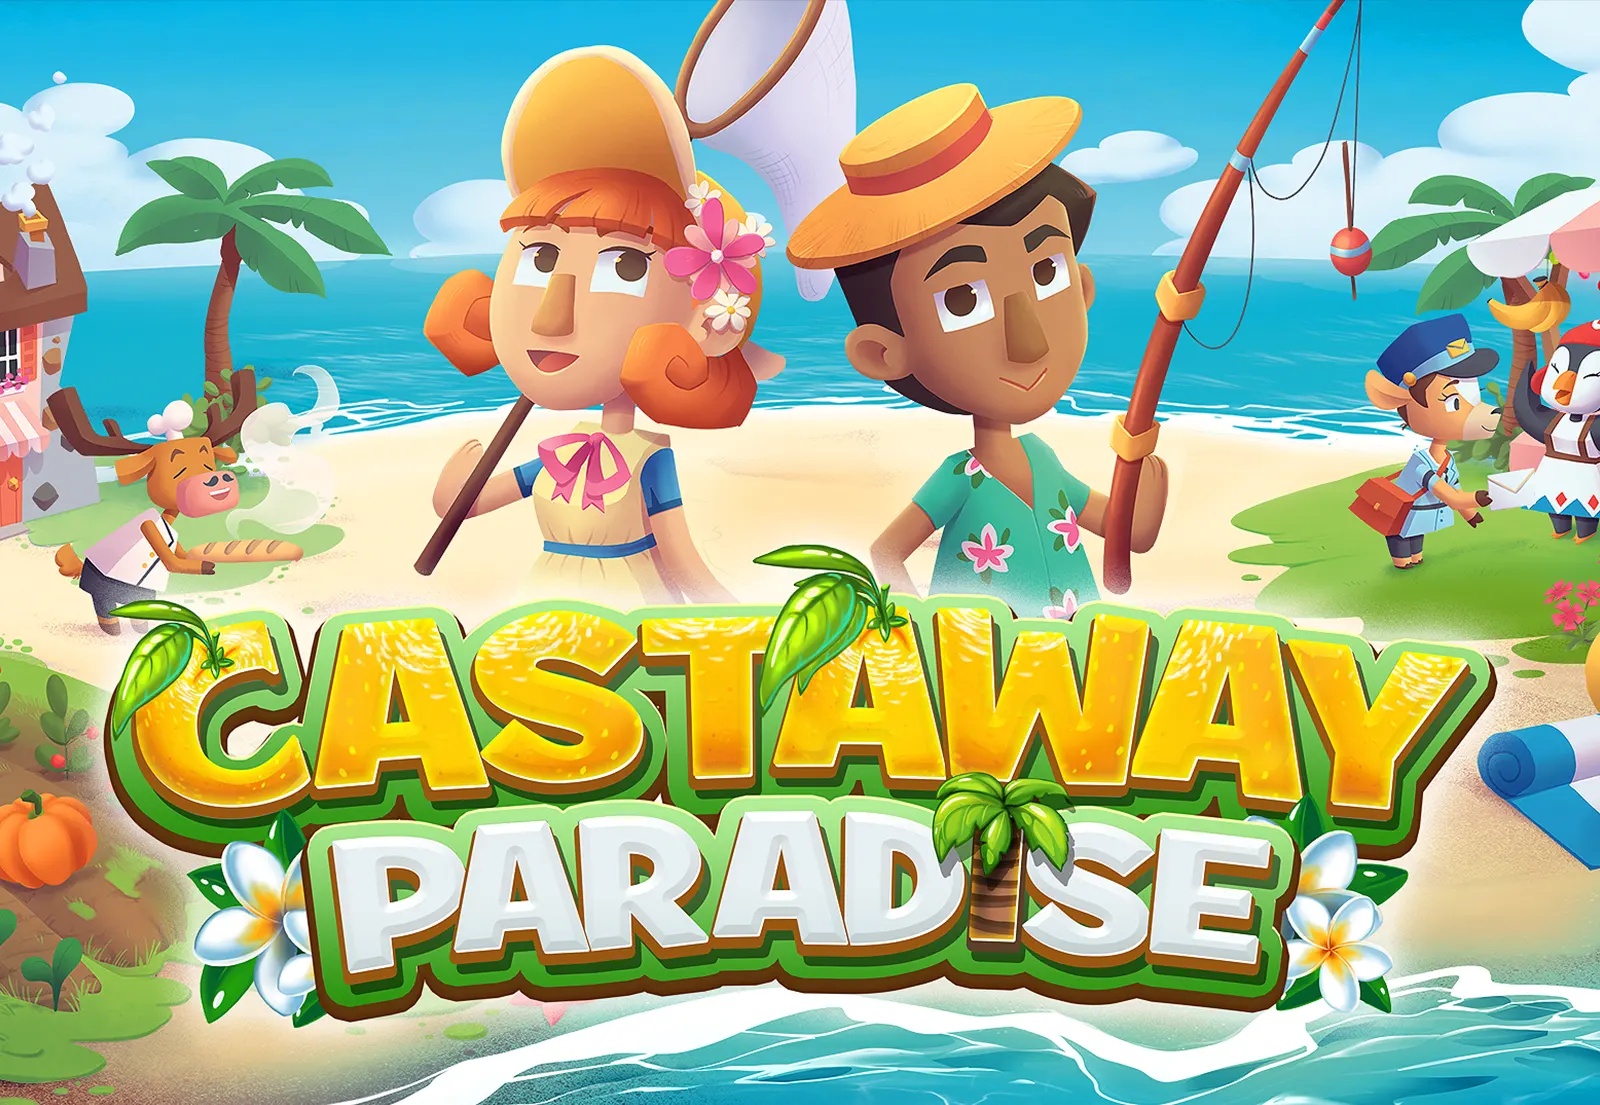 Castaway Paradise - Nintendo Switch Review